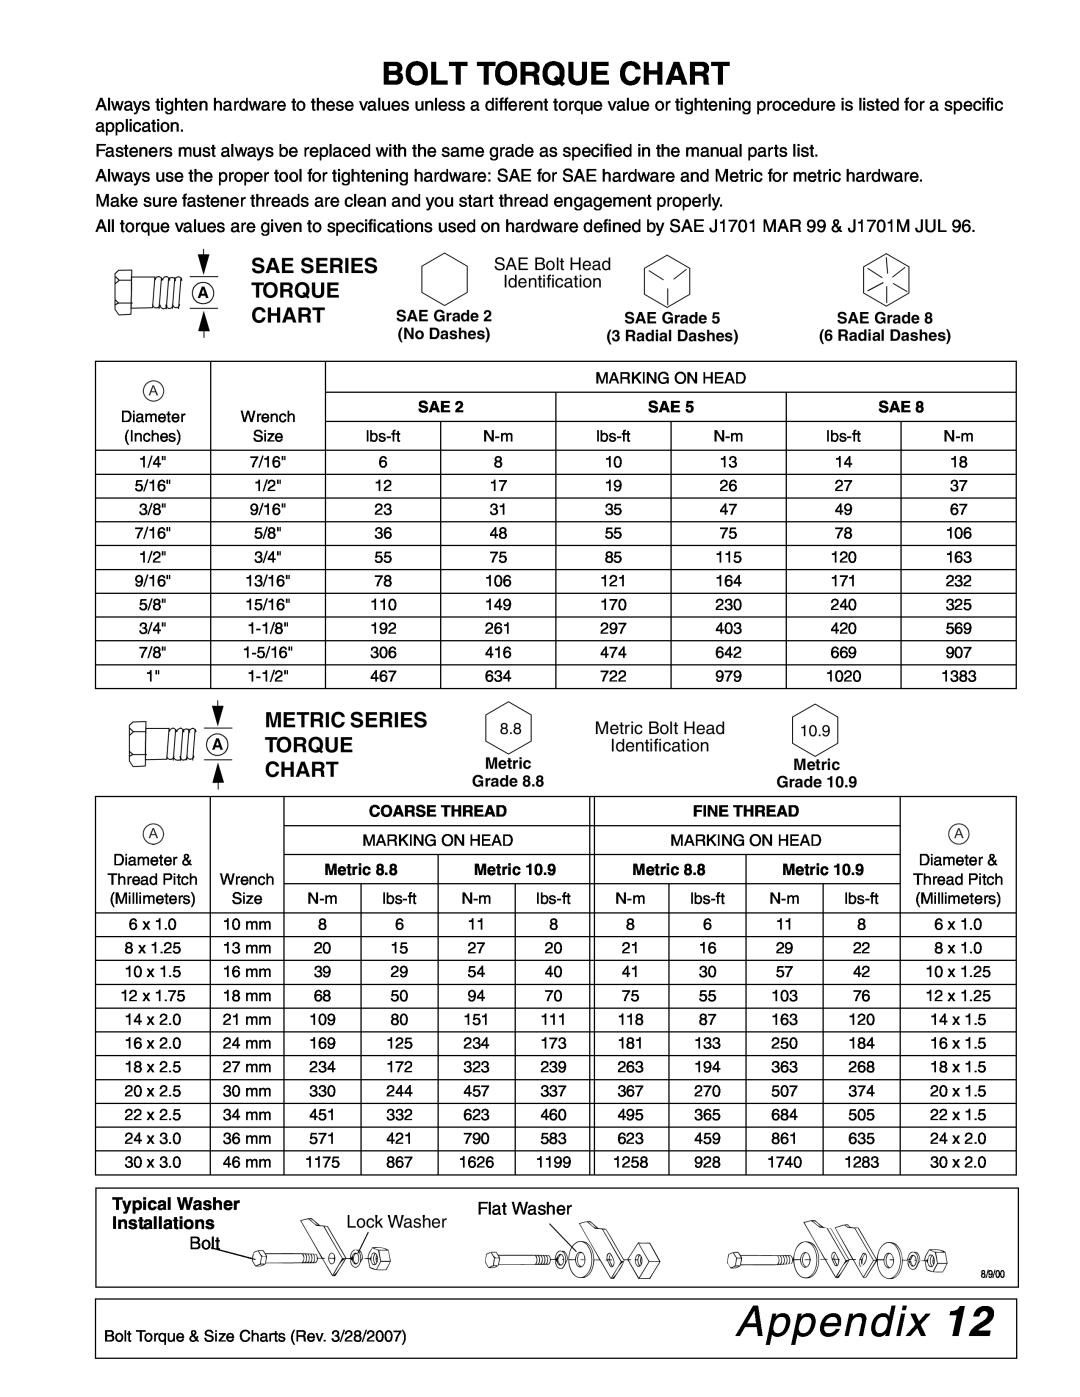 Woods Equipment 2104045 installation manual Appendix, Bolt Torque Chart, Sae Series A Torque Chart, Metric Series 